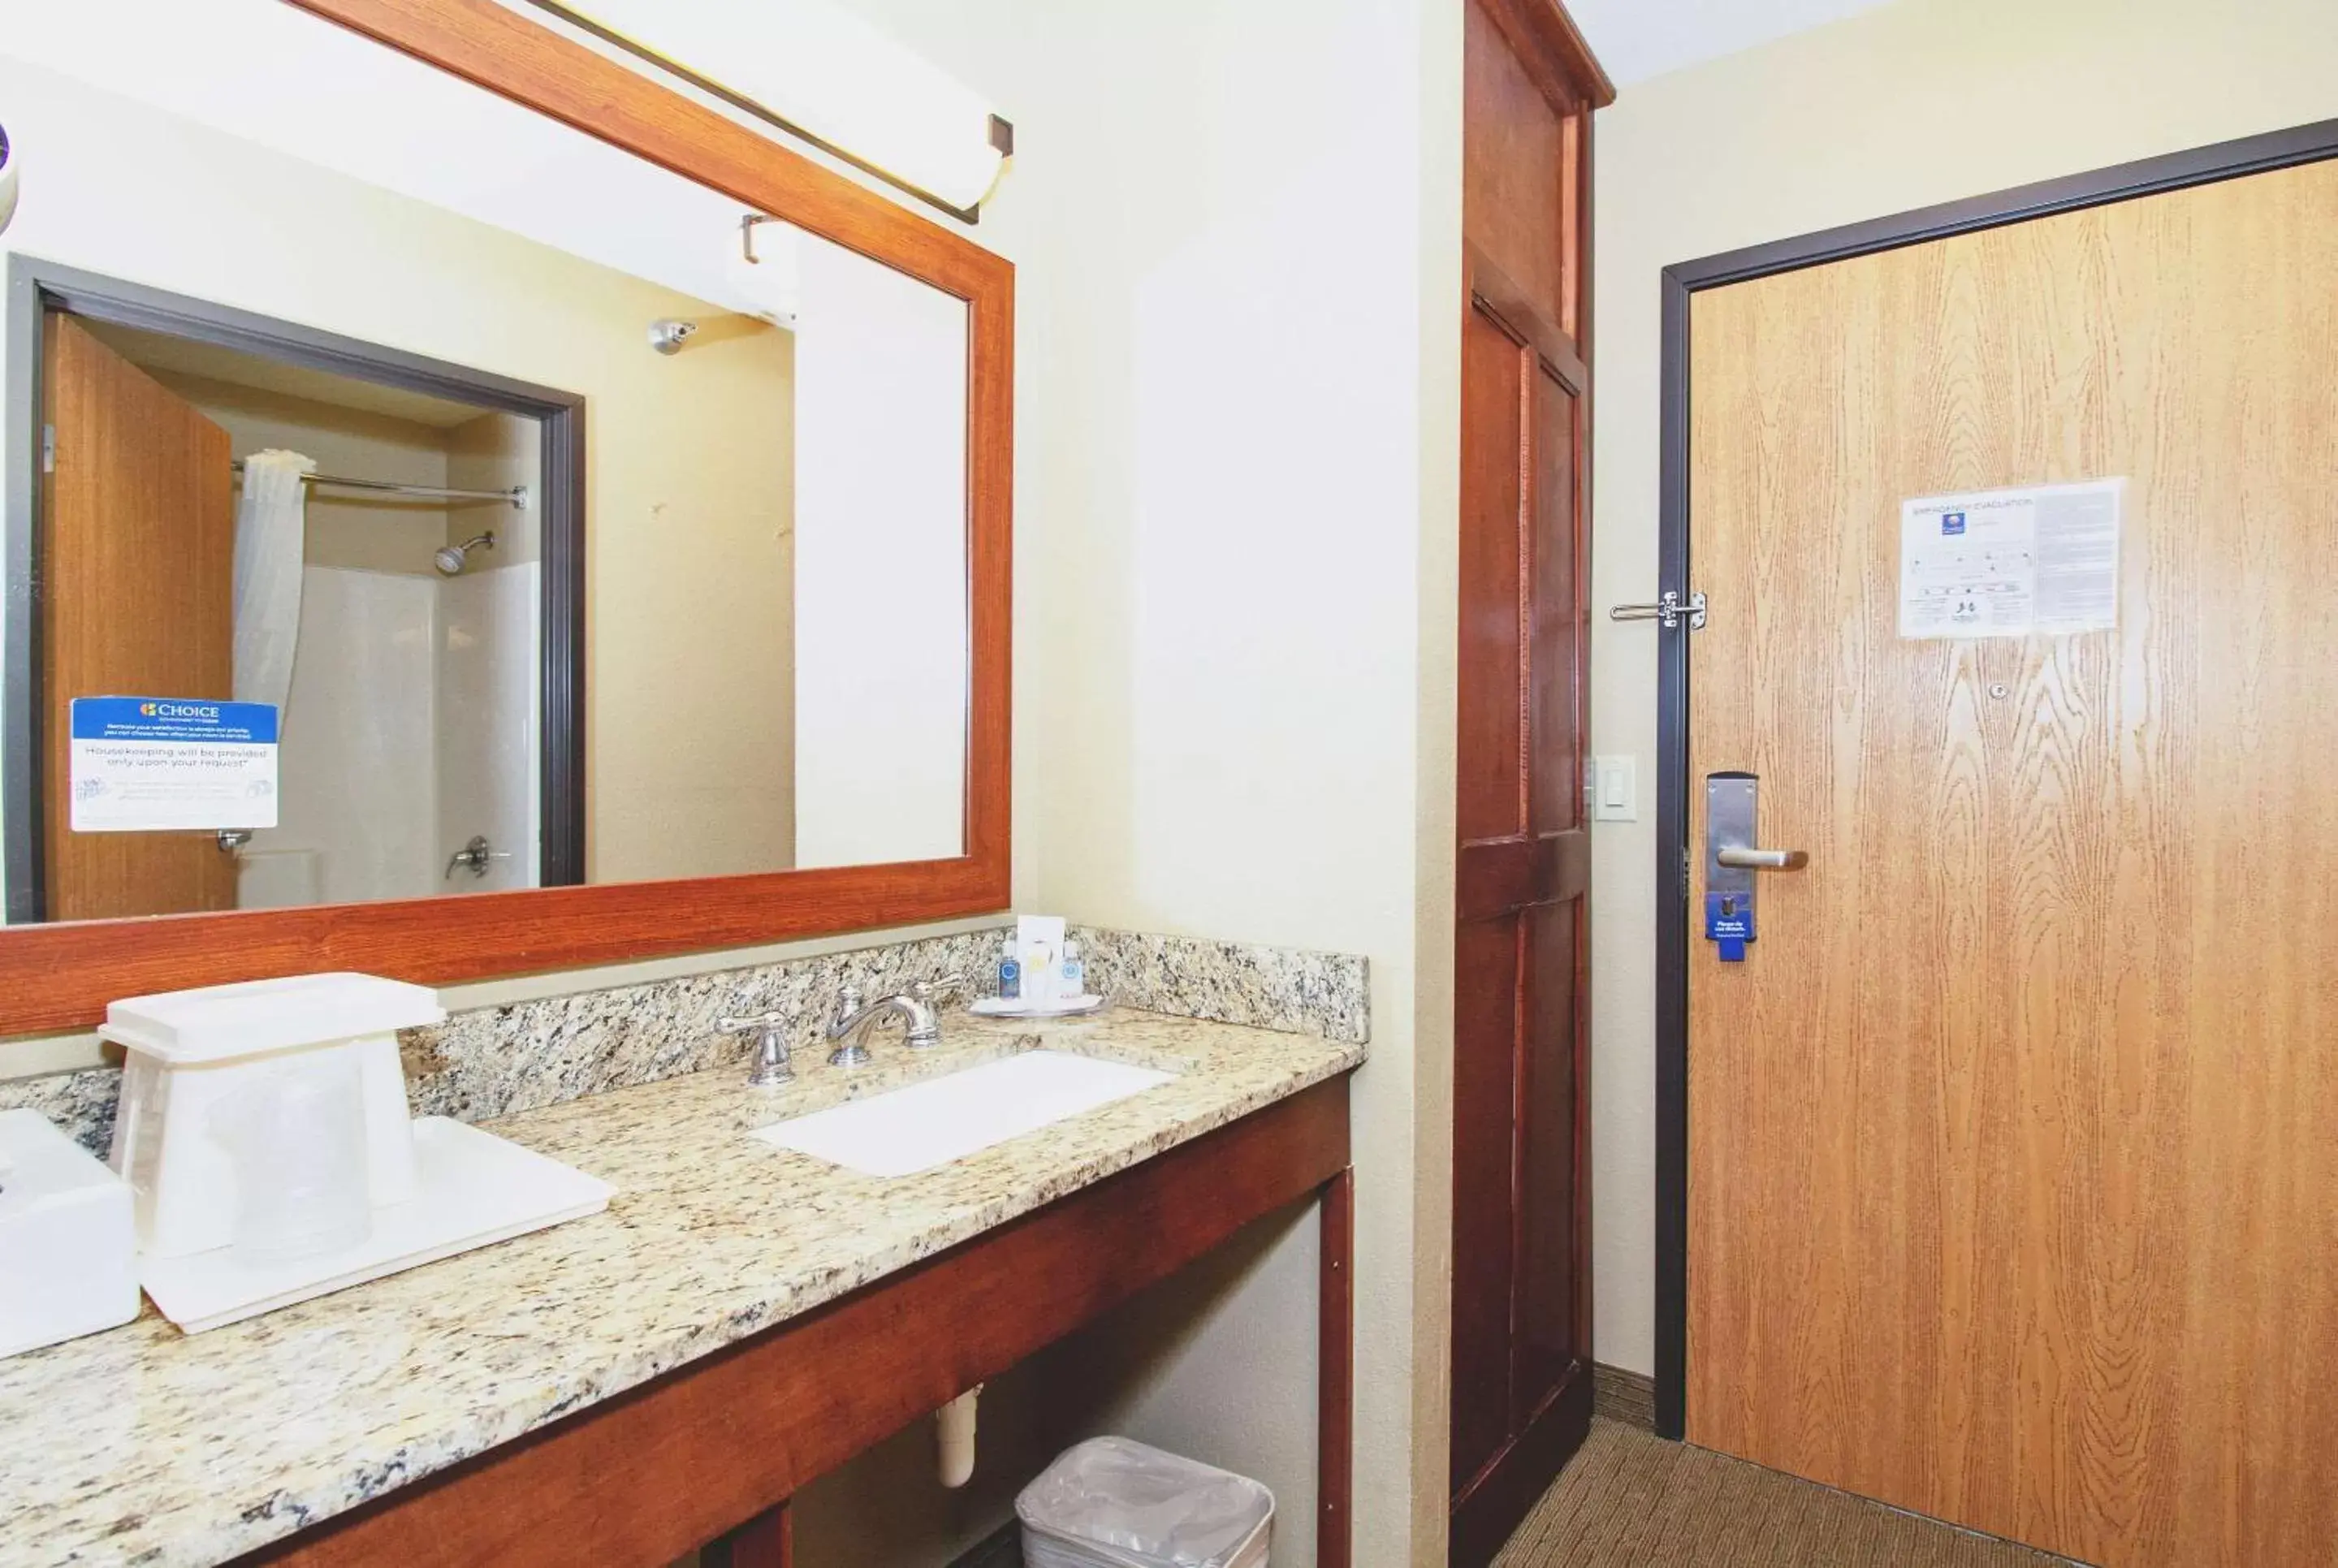 Bathroom in Comfort Inn & Suites East Moline near I-80